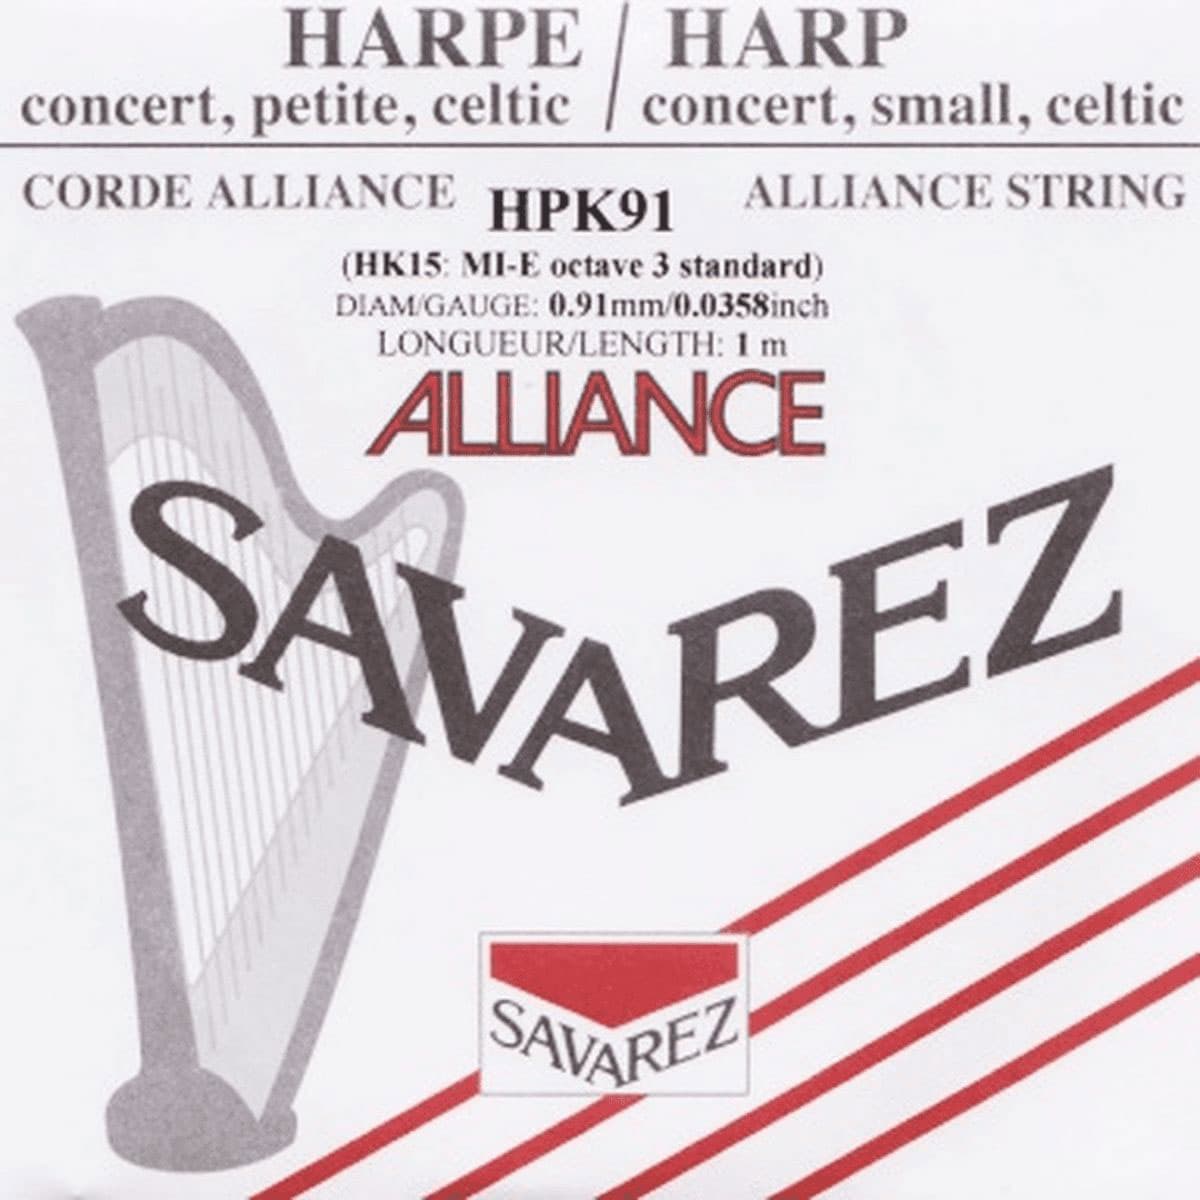 SAVAREZ HARP ALLIANCE STRING DIAMETER 0,91MM